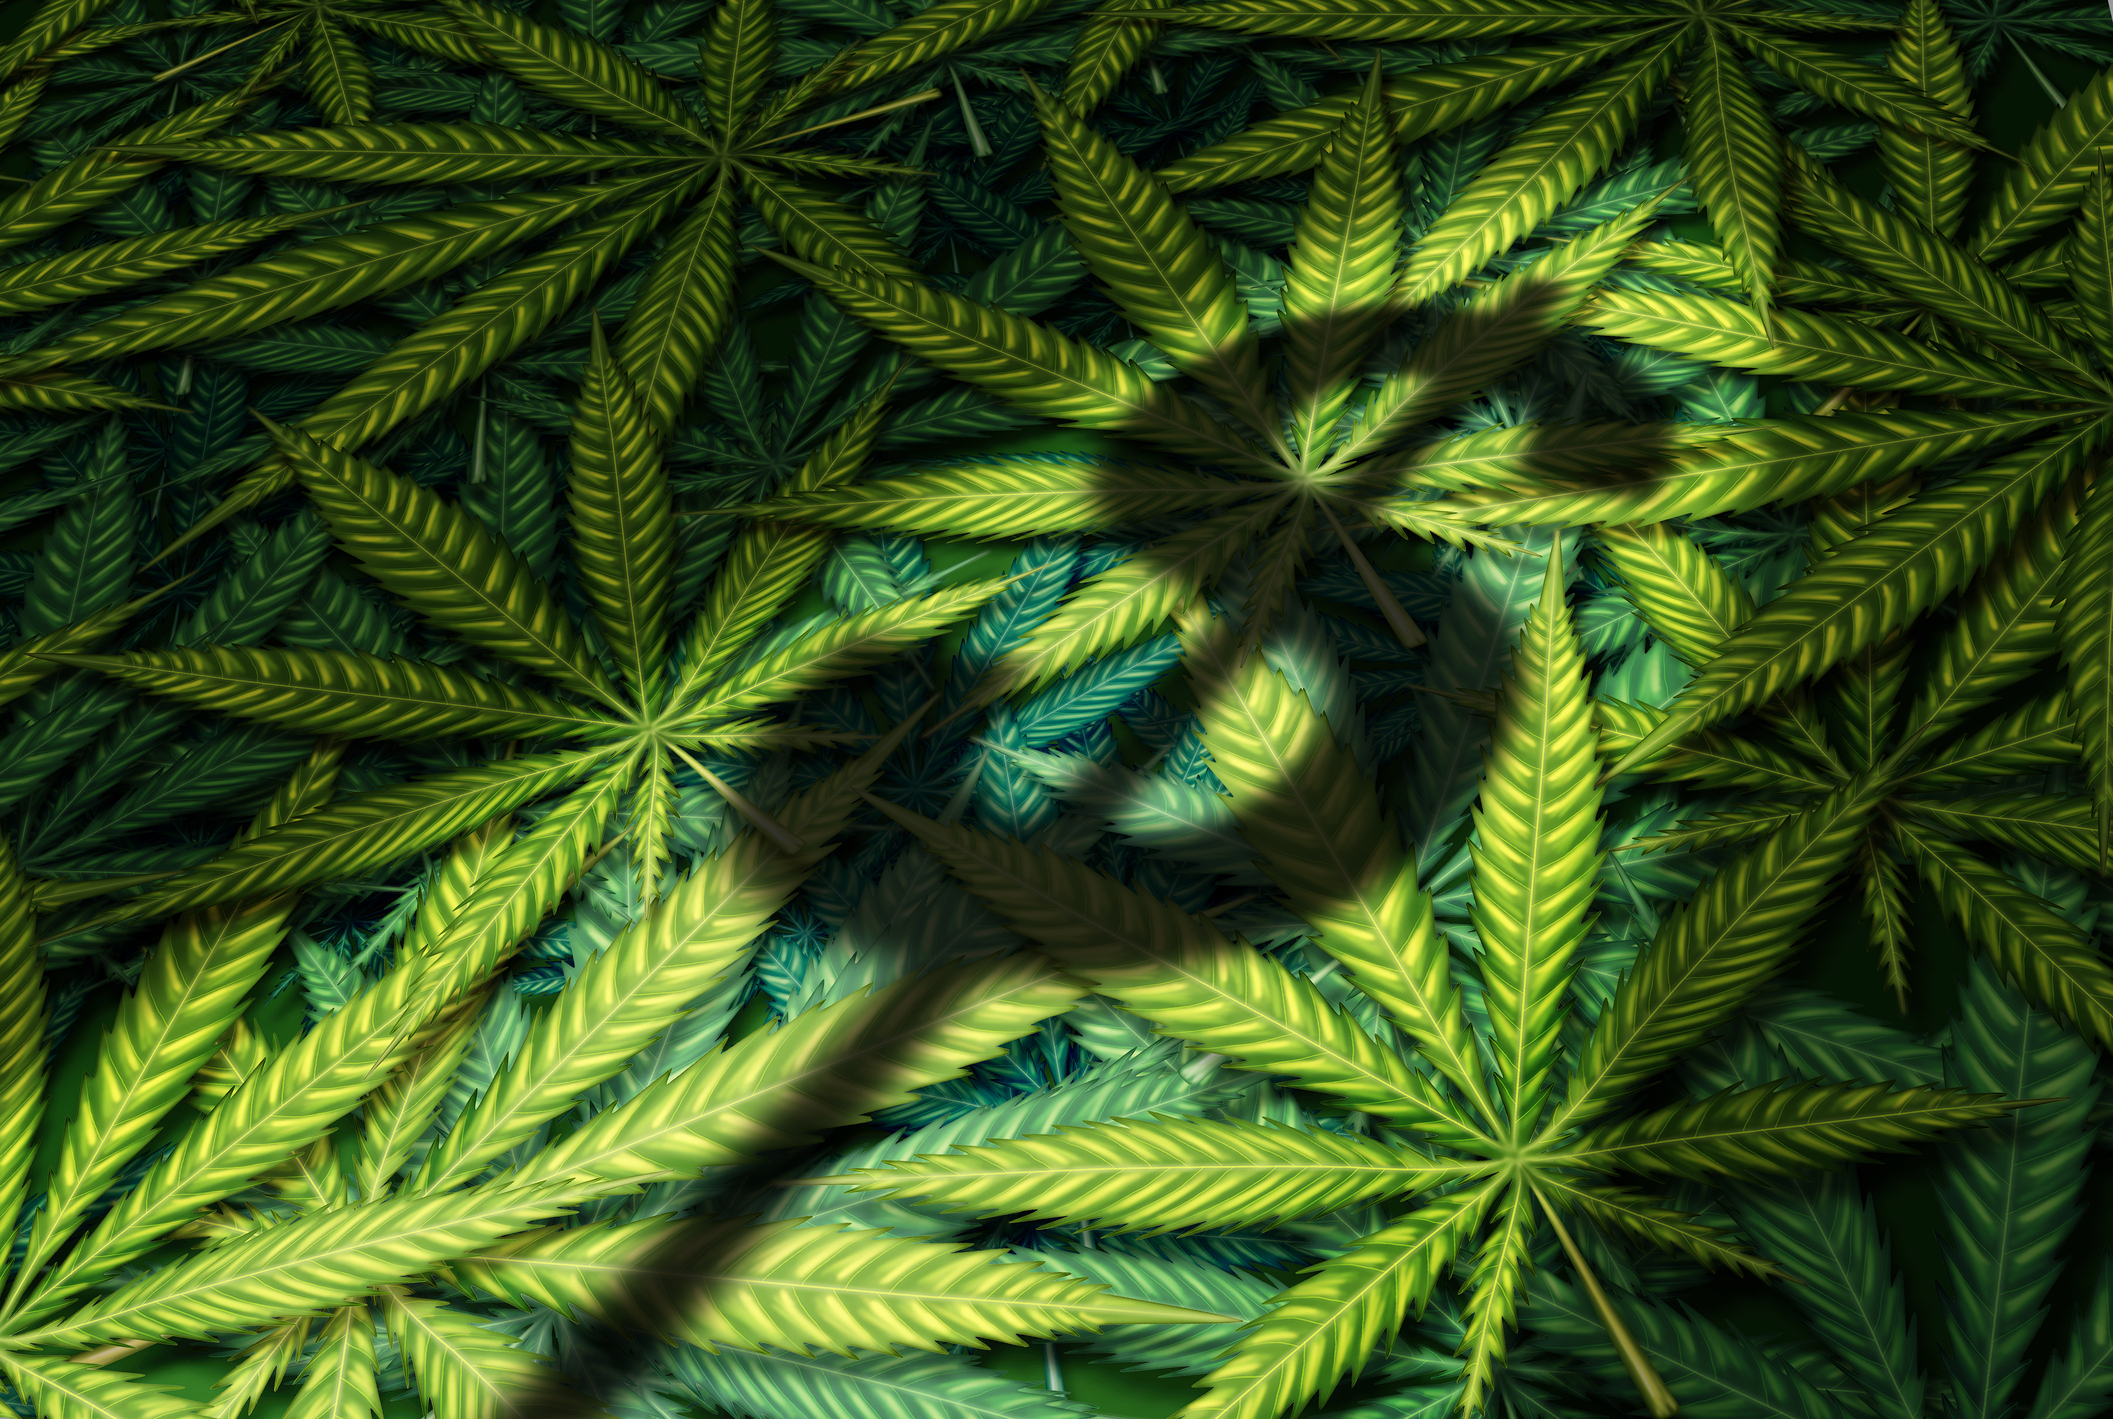 Arizona: Measure introduced To Defelonize Minor Marijuana Offenses